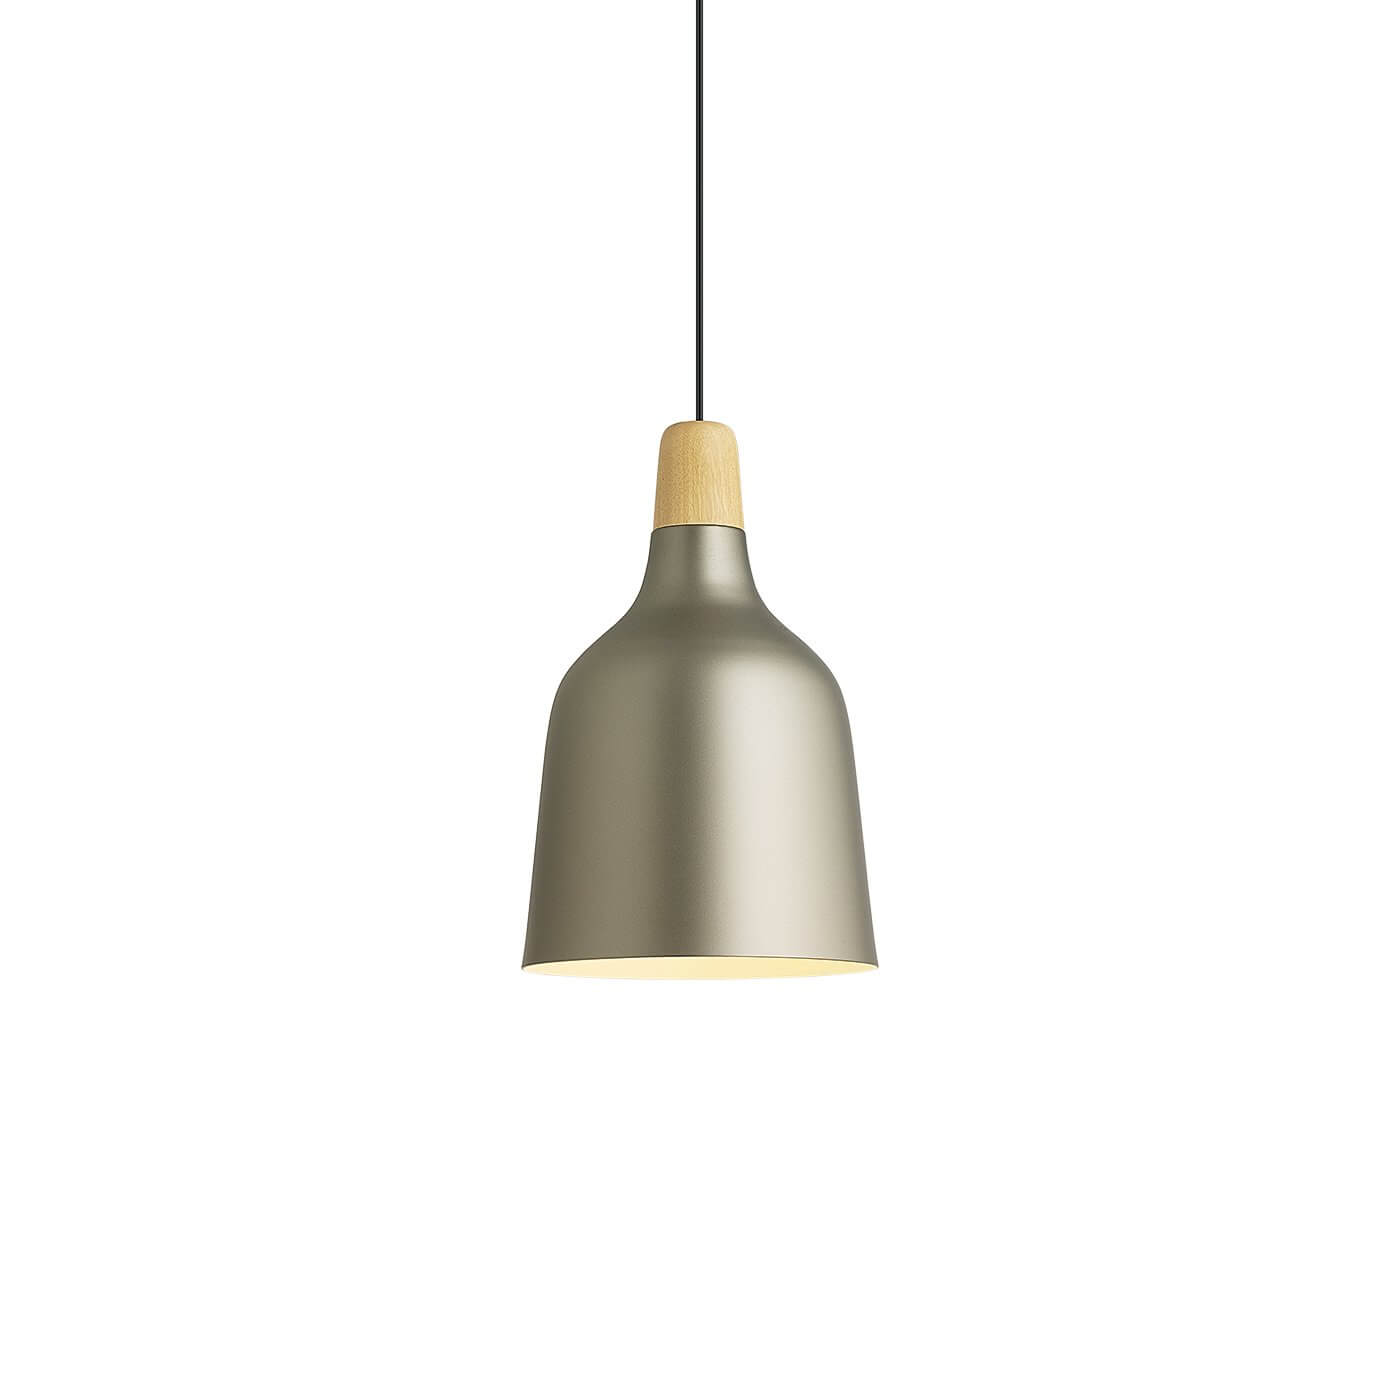 Pendul metalic TOPPER - 💡 Design modern, nou, elegant